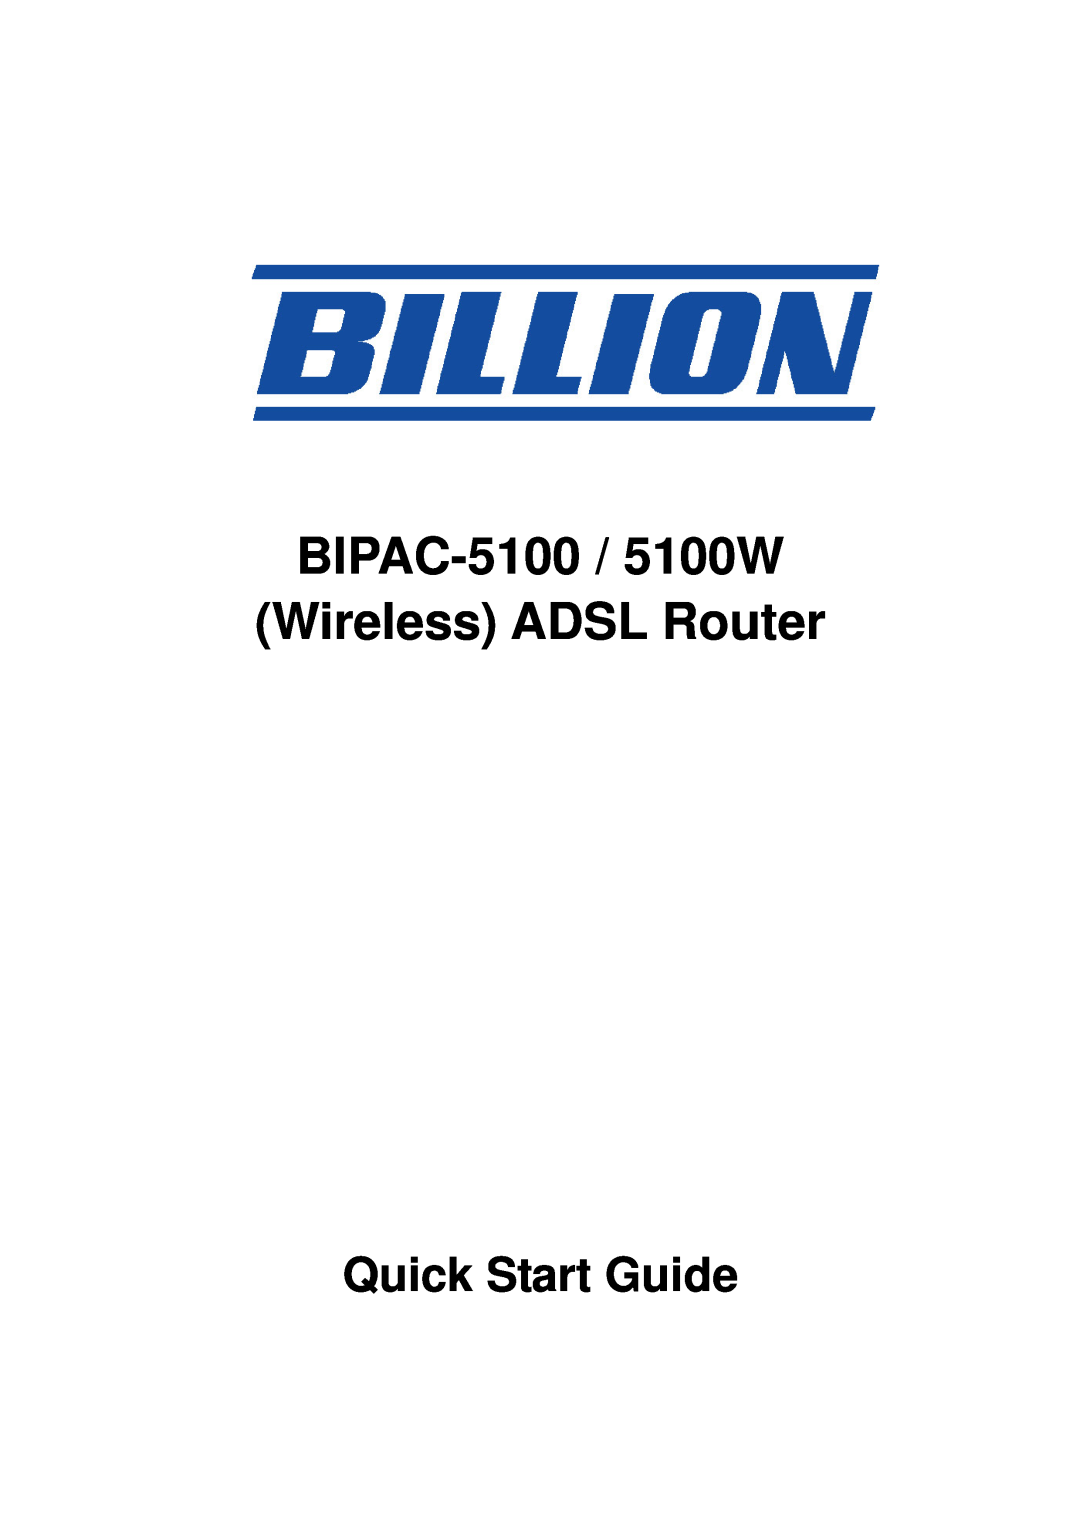 Billion Electric Company quick start BIPAC-5100 / 5100W Wireless ADSL Router, Quick Start Guide 